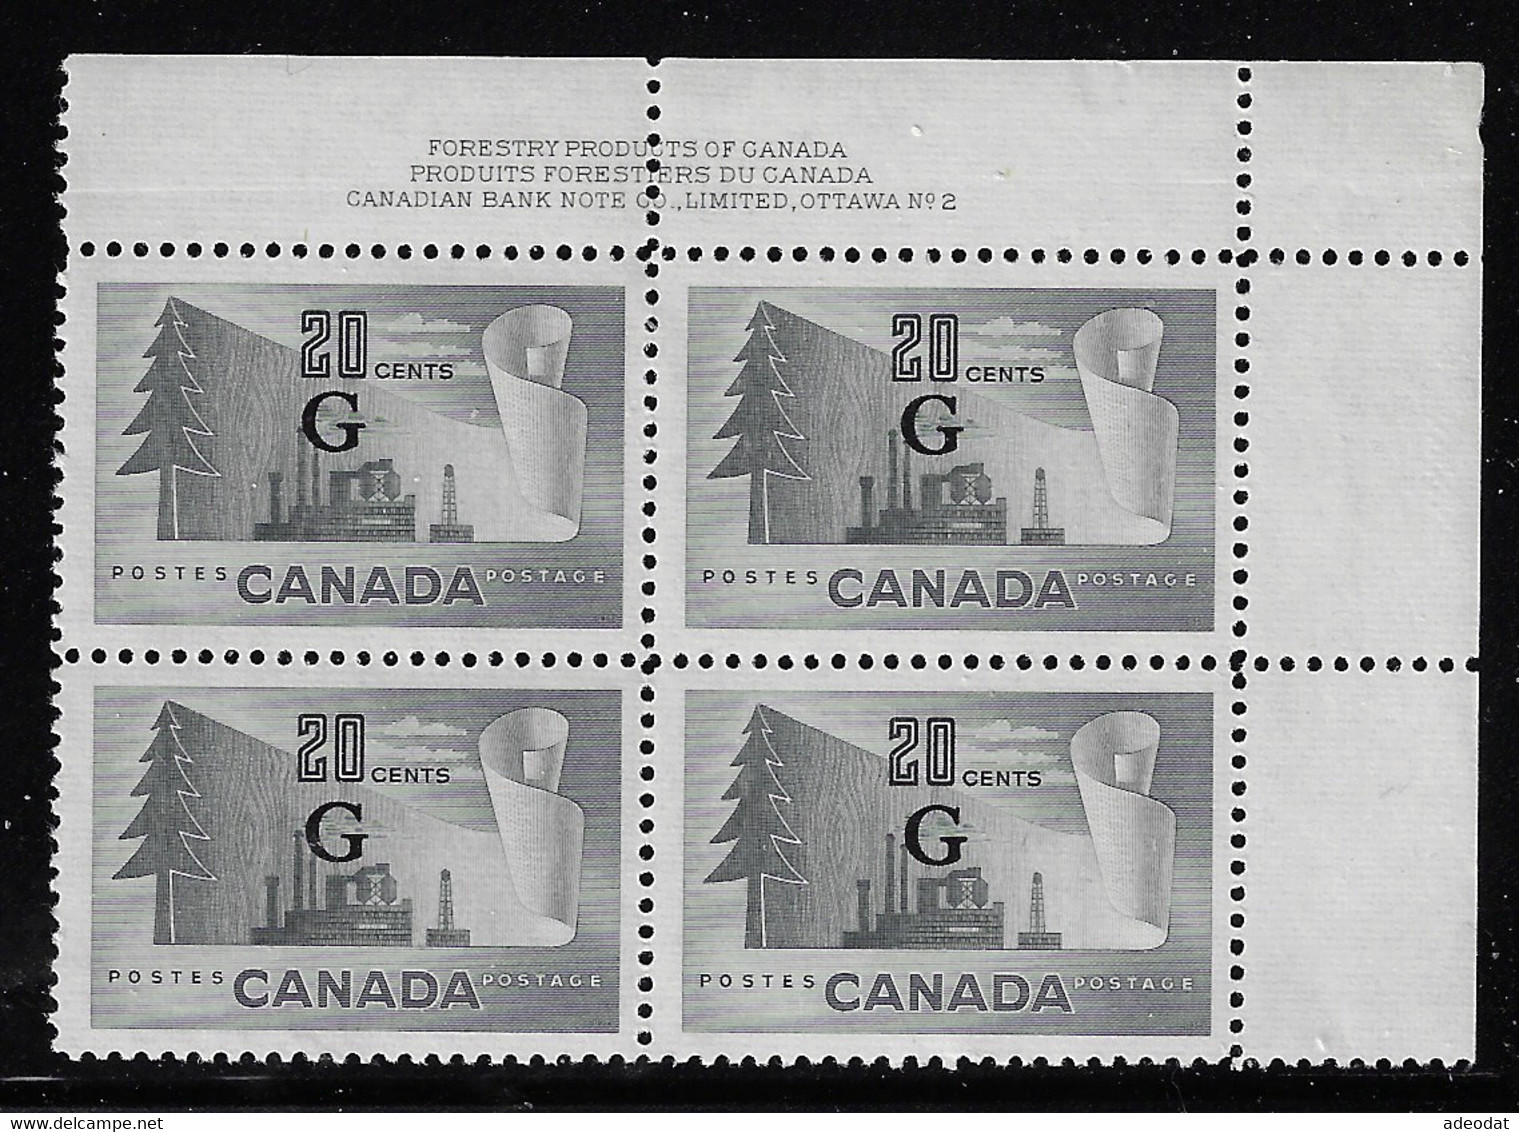 CANADA 1951 OFFICIAL STAMPS UR PLATE BLOCK #2 SCOTT O30 CV US $12.00. JPG - Surchargés